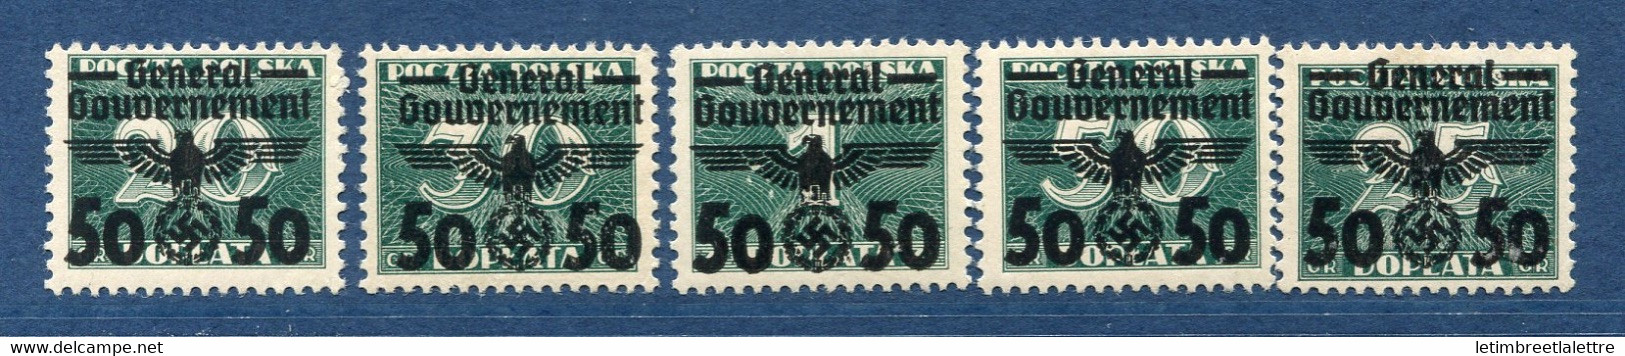 ⭐ Pologne - Gouvernement Général - YT N° 51 à 55 ** - Neuf Sans Charnière - 1940 ⭐ - Algemene Overheid